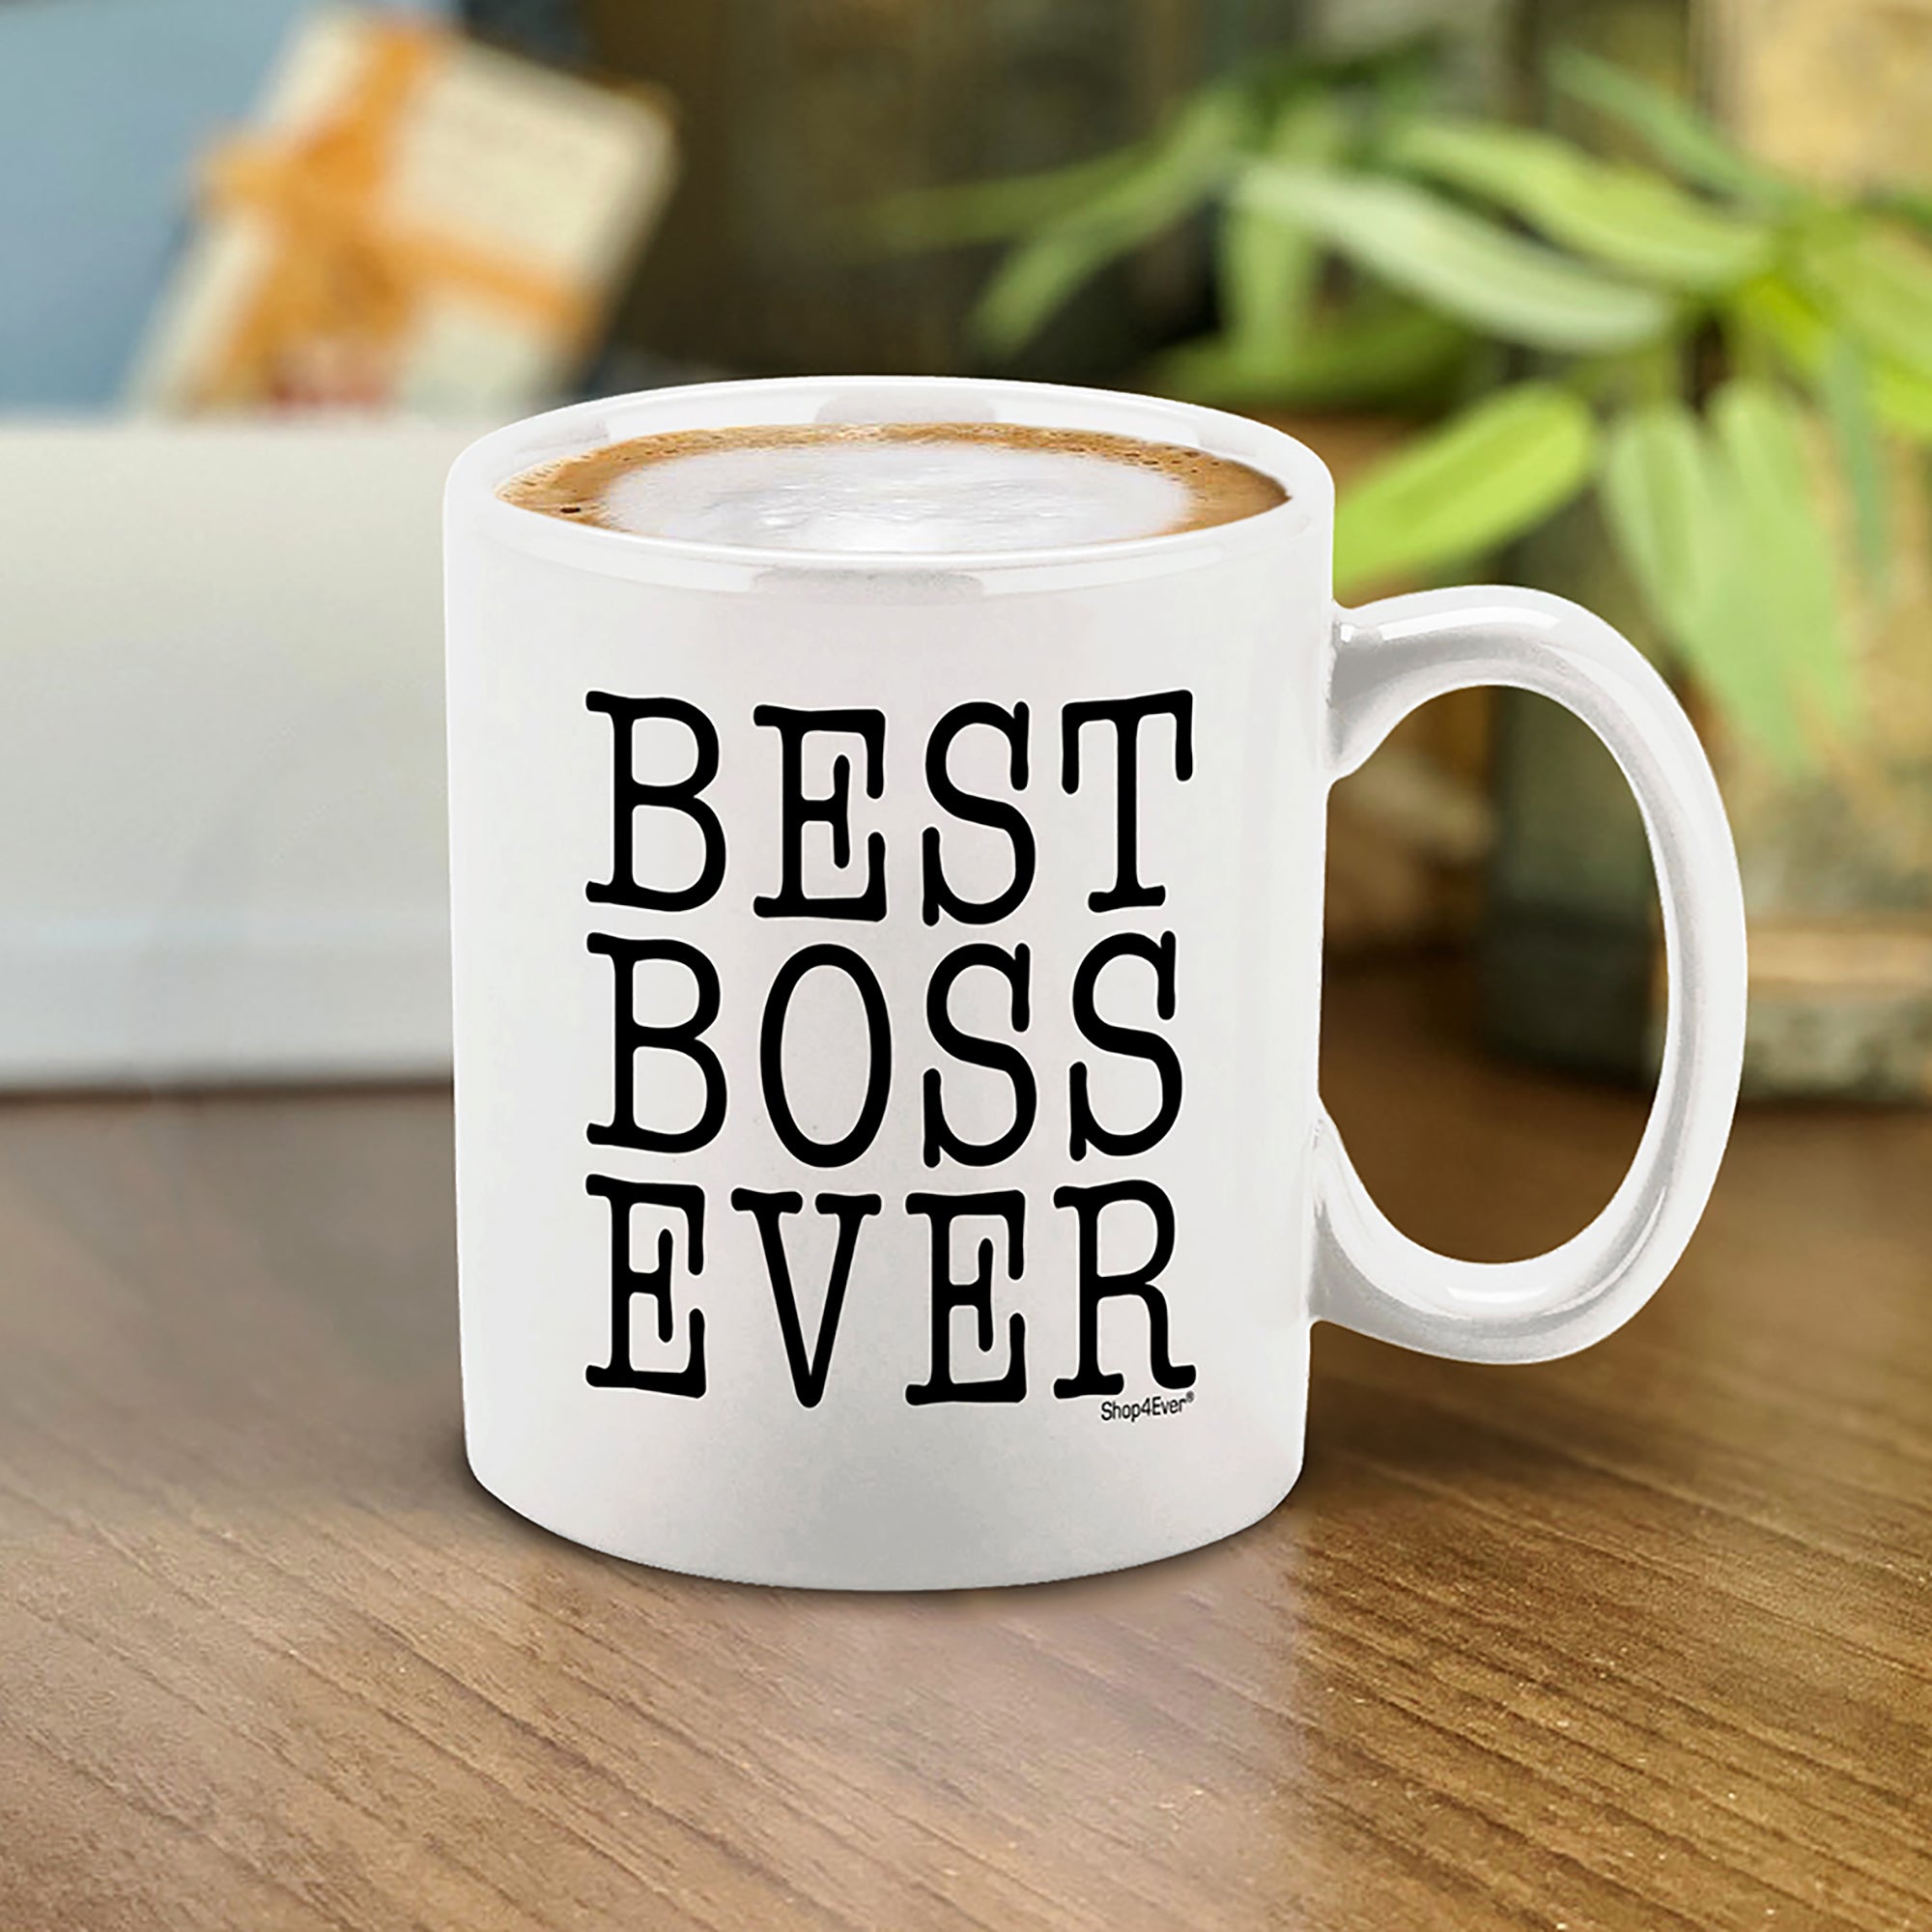 Best Boss Ever Ceramic Coffee Mug Tea Cup